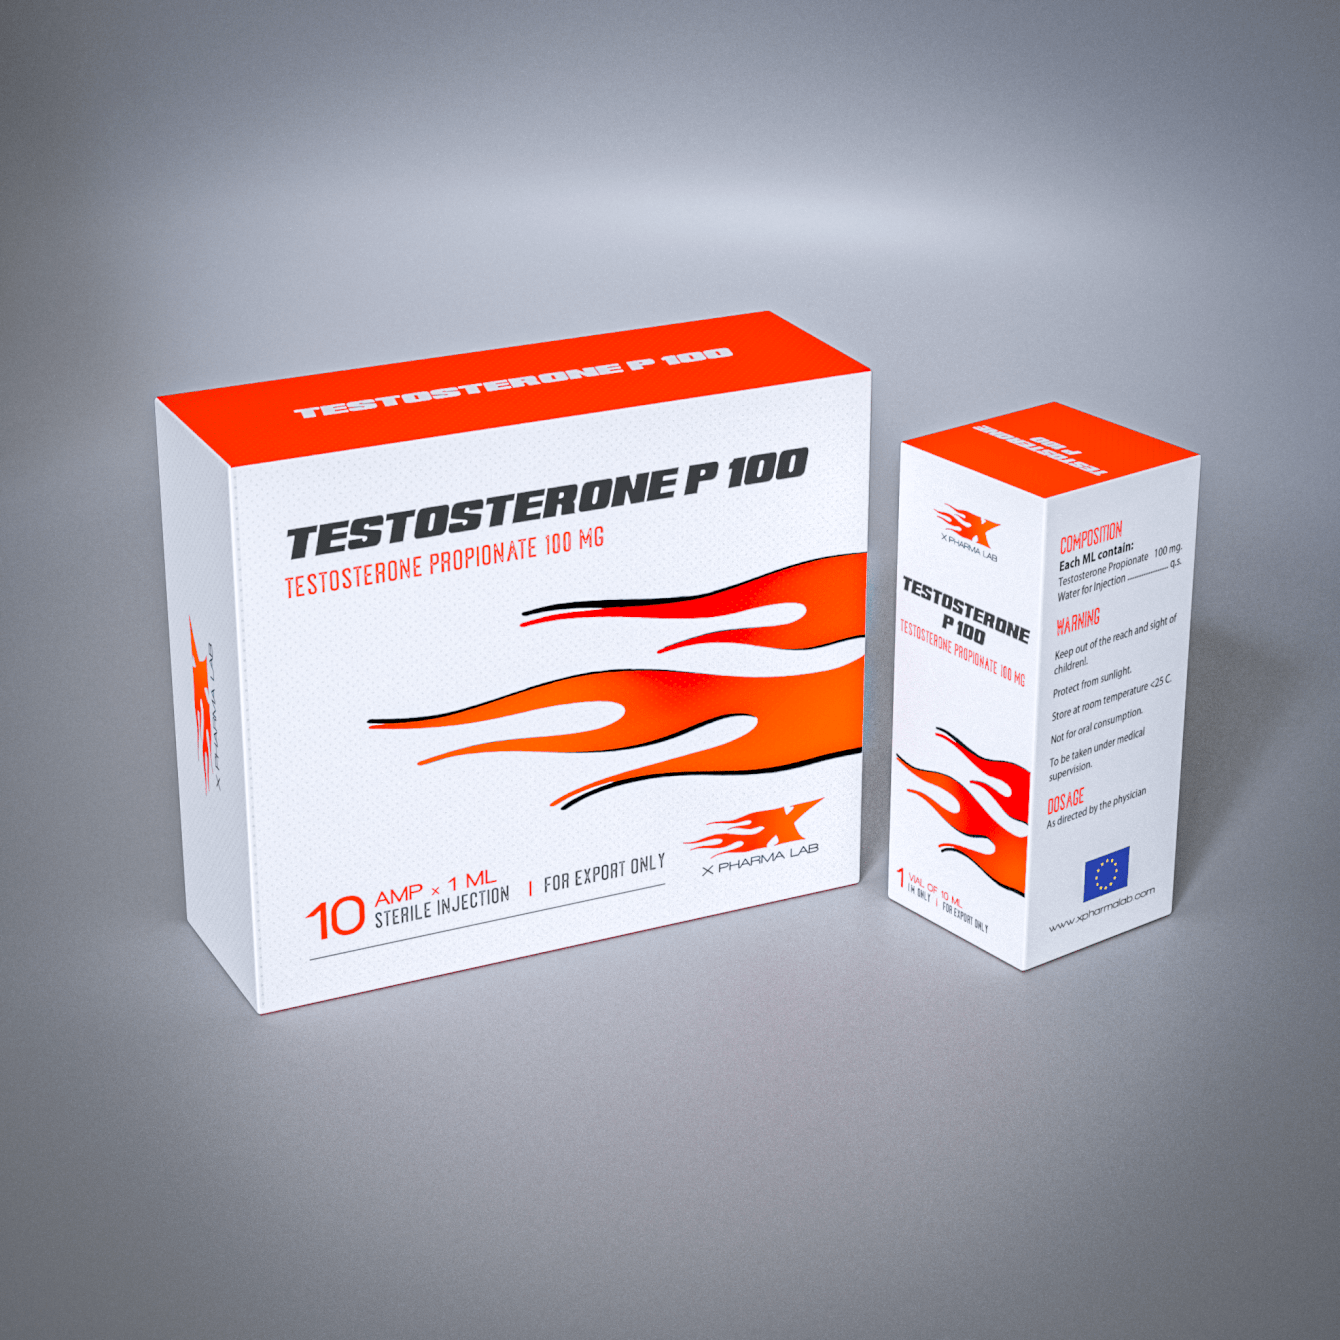 Testosterone P 100